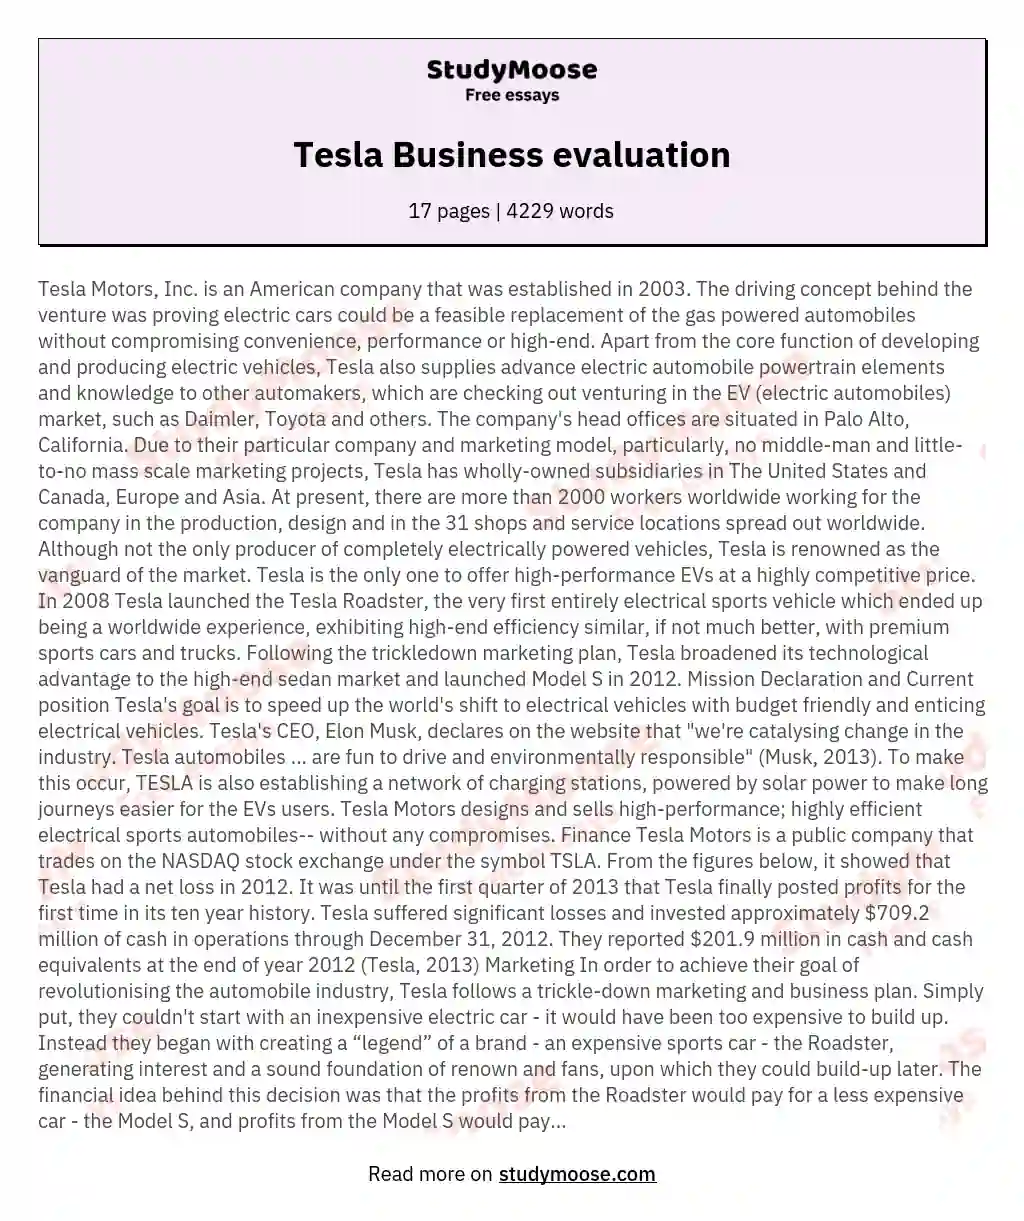 Tesla Business evaluation